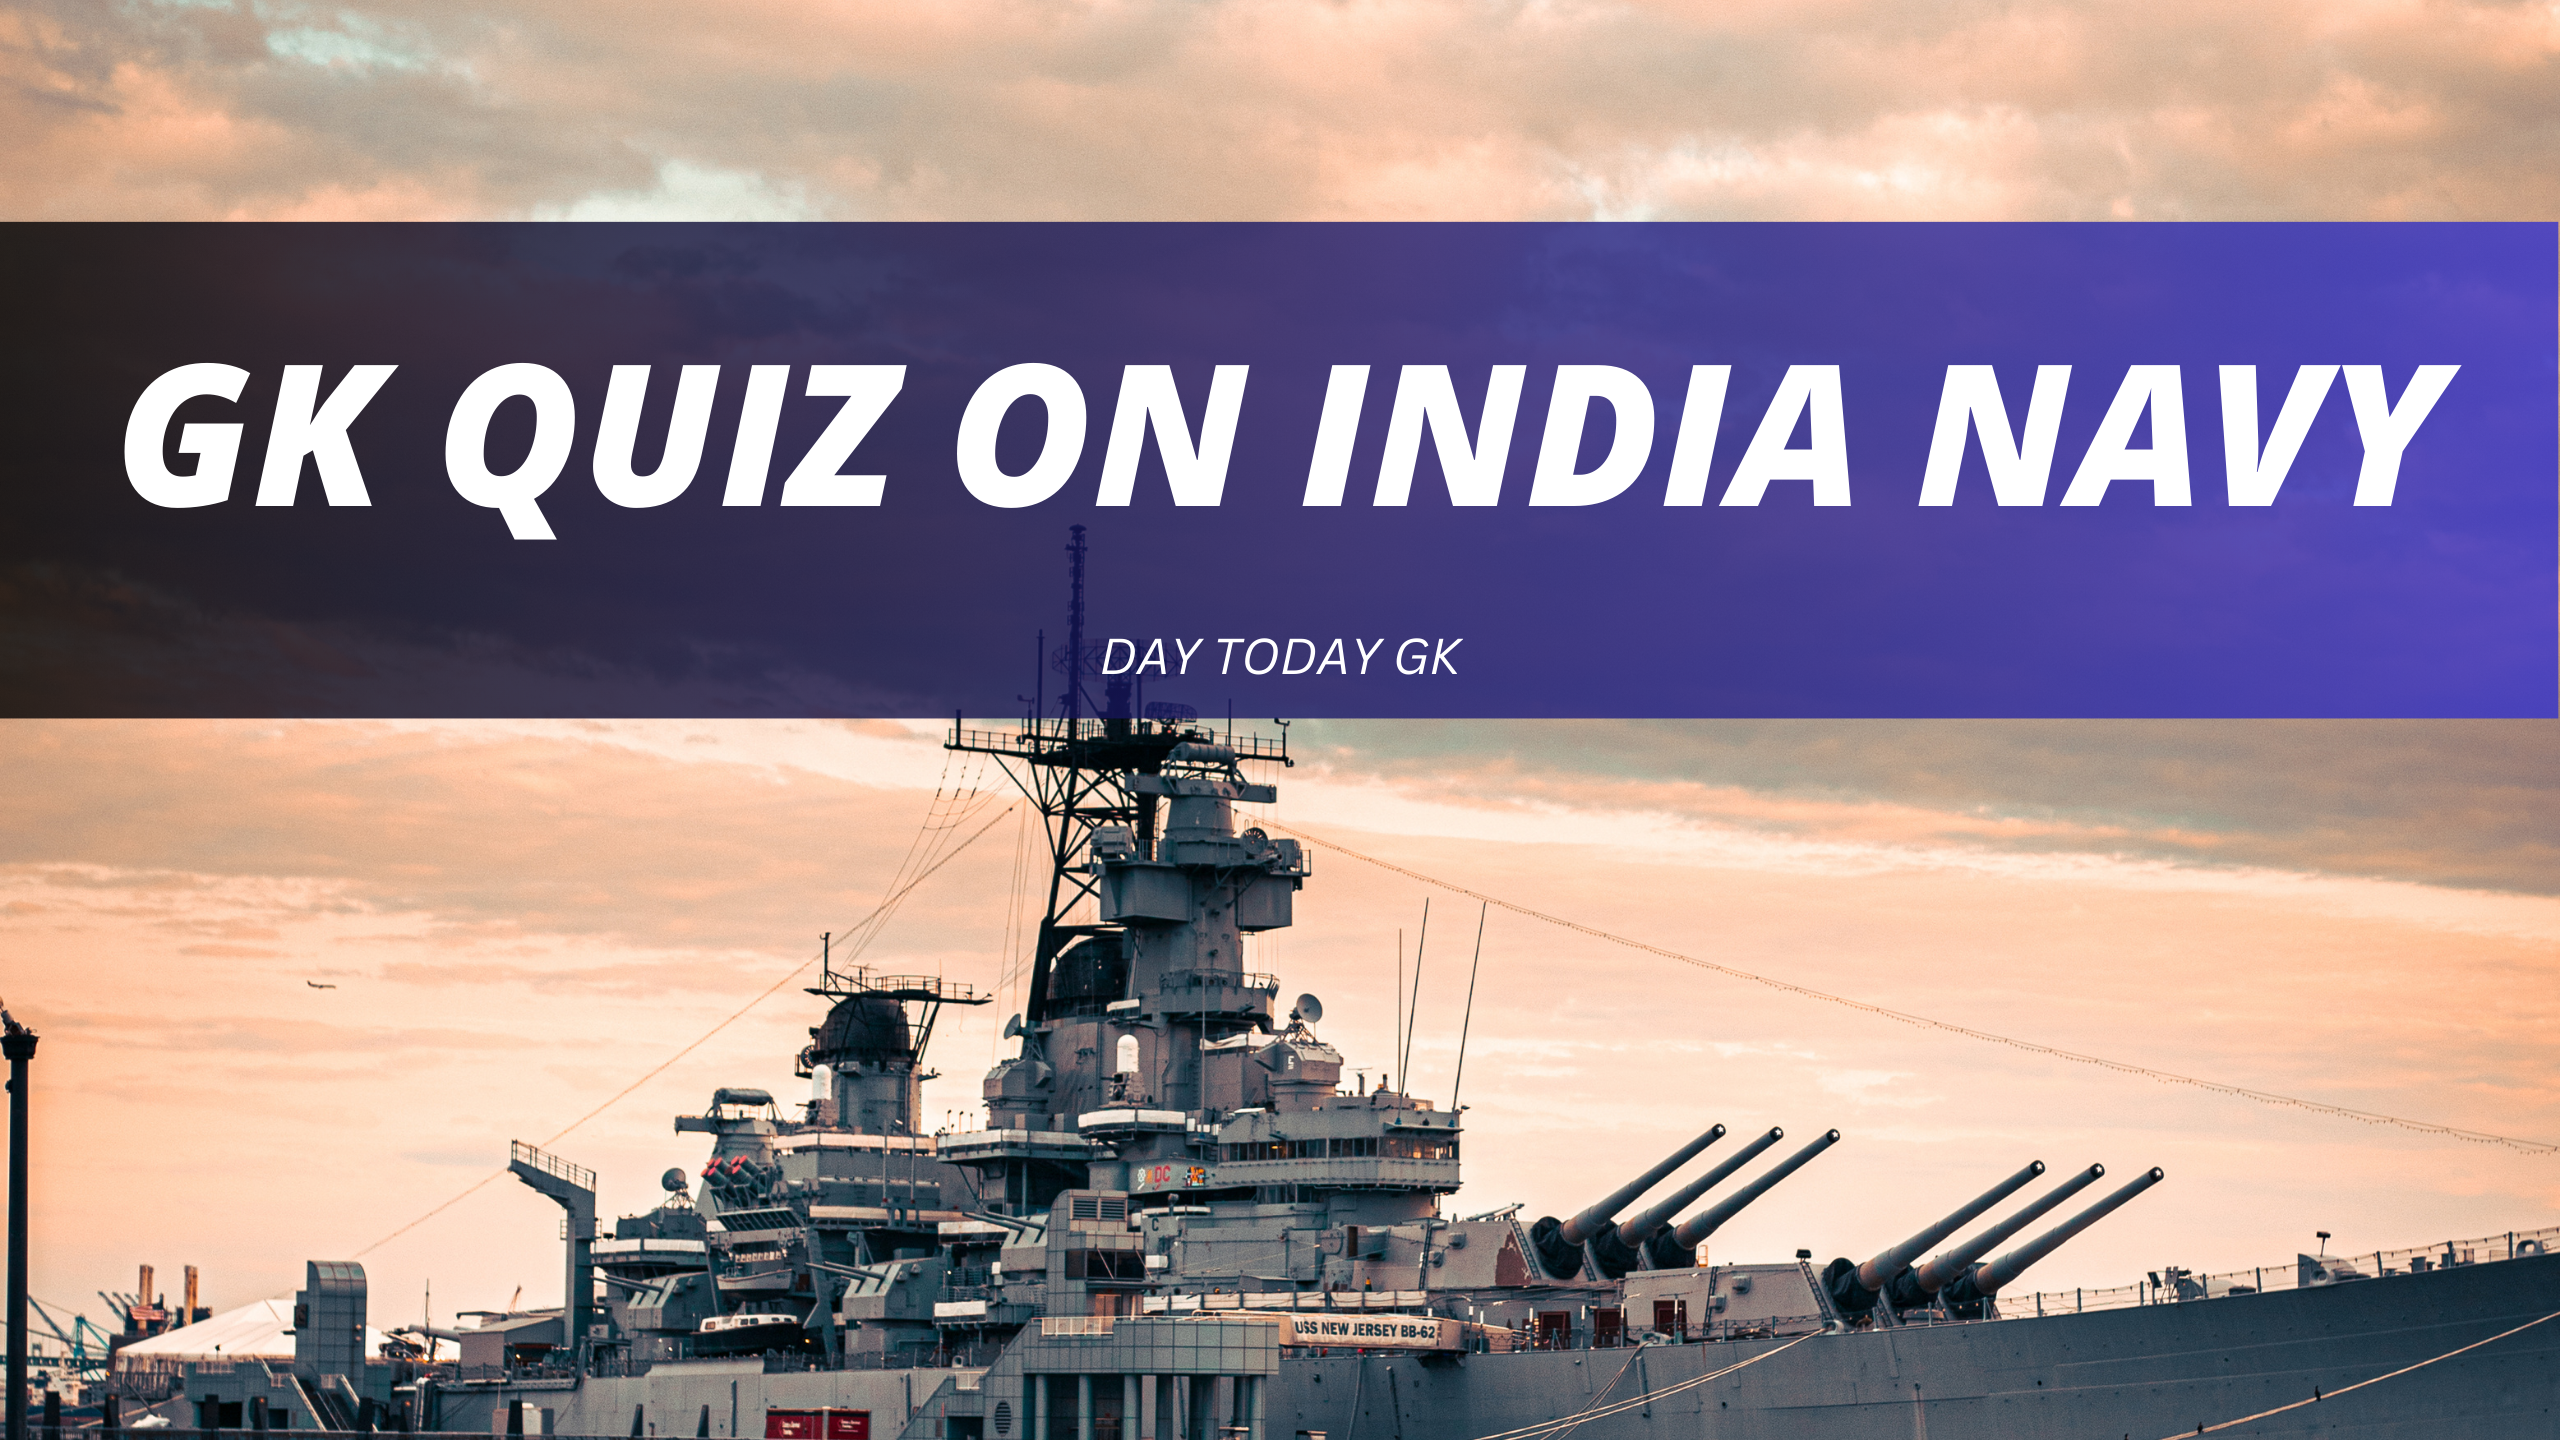 GK Quiz on Indian Navy